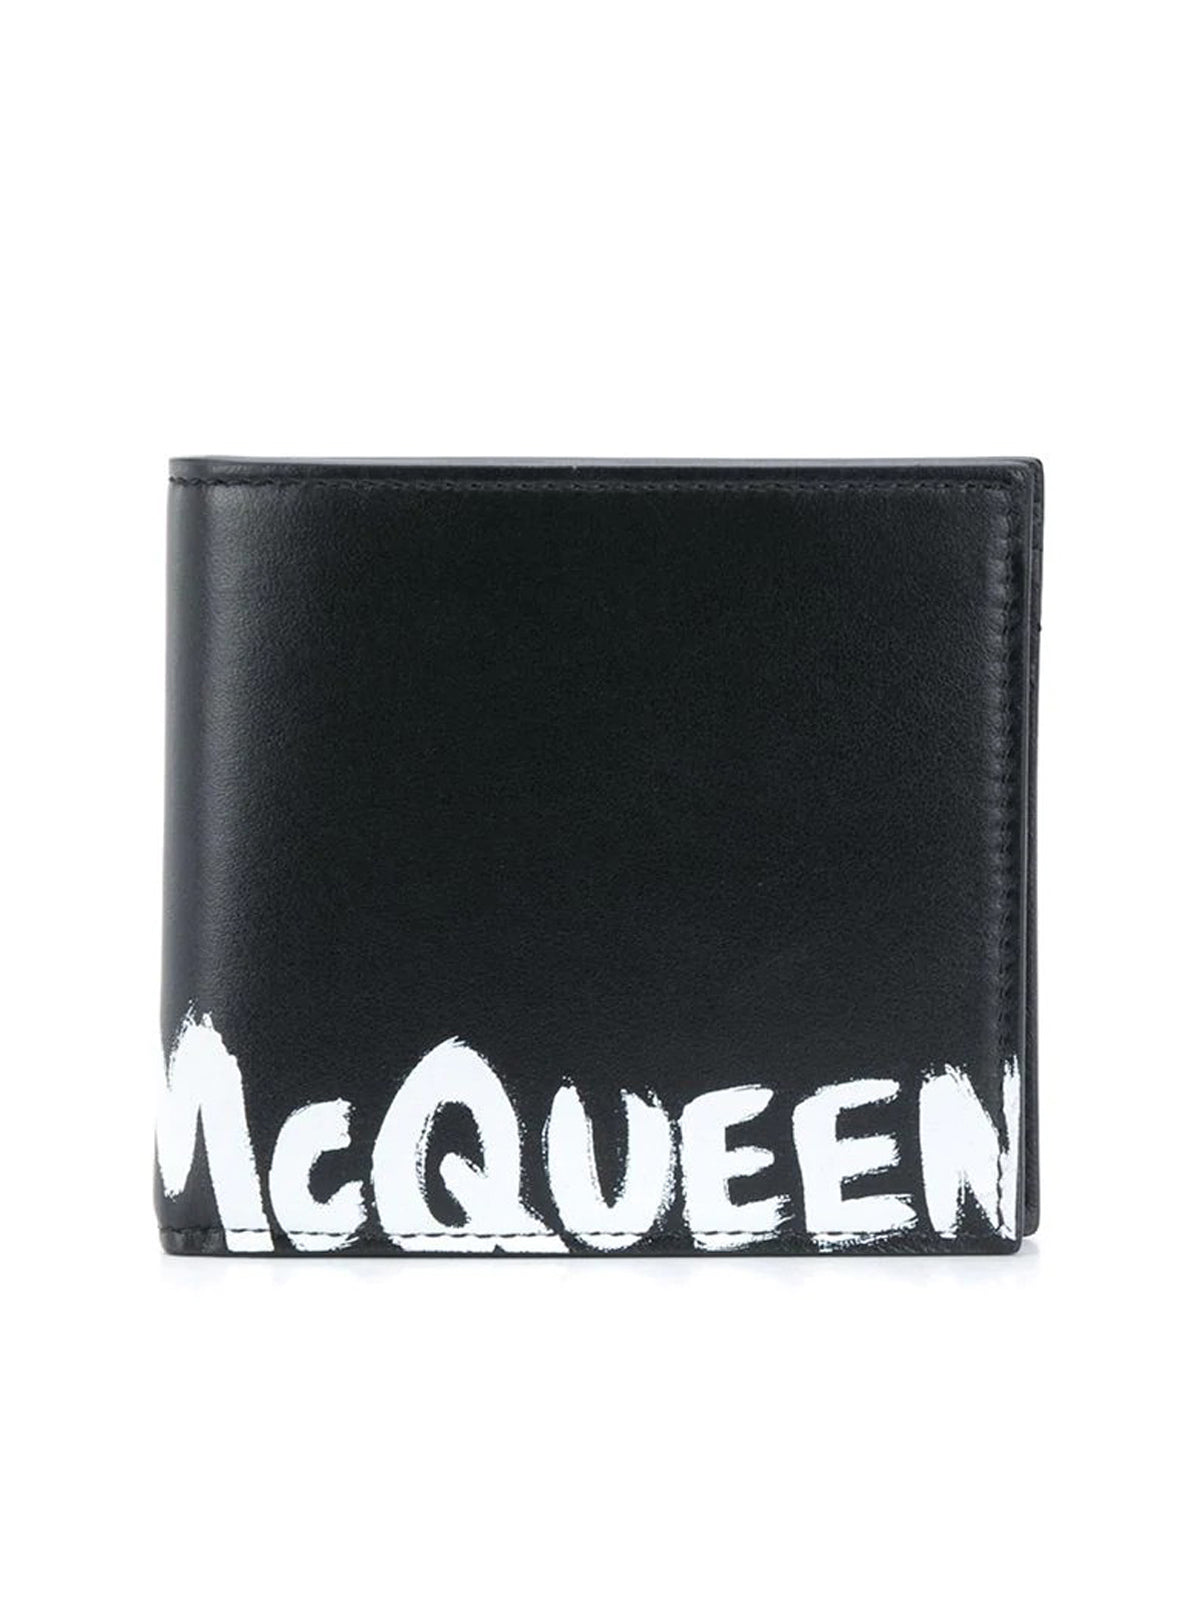 McQueen graffiti print wallet